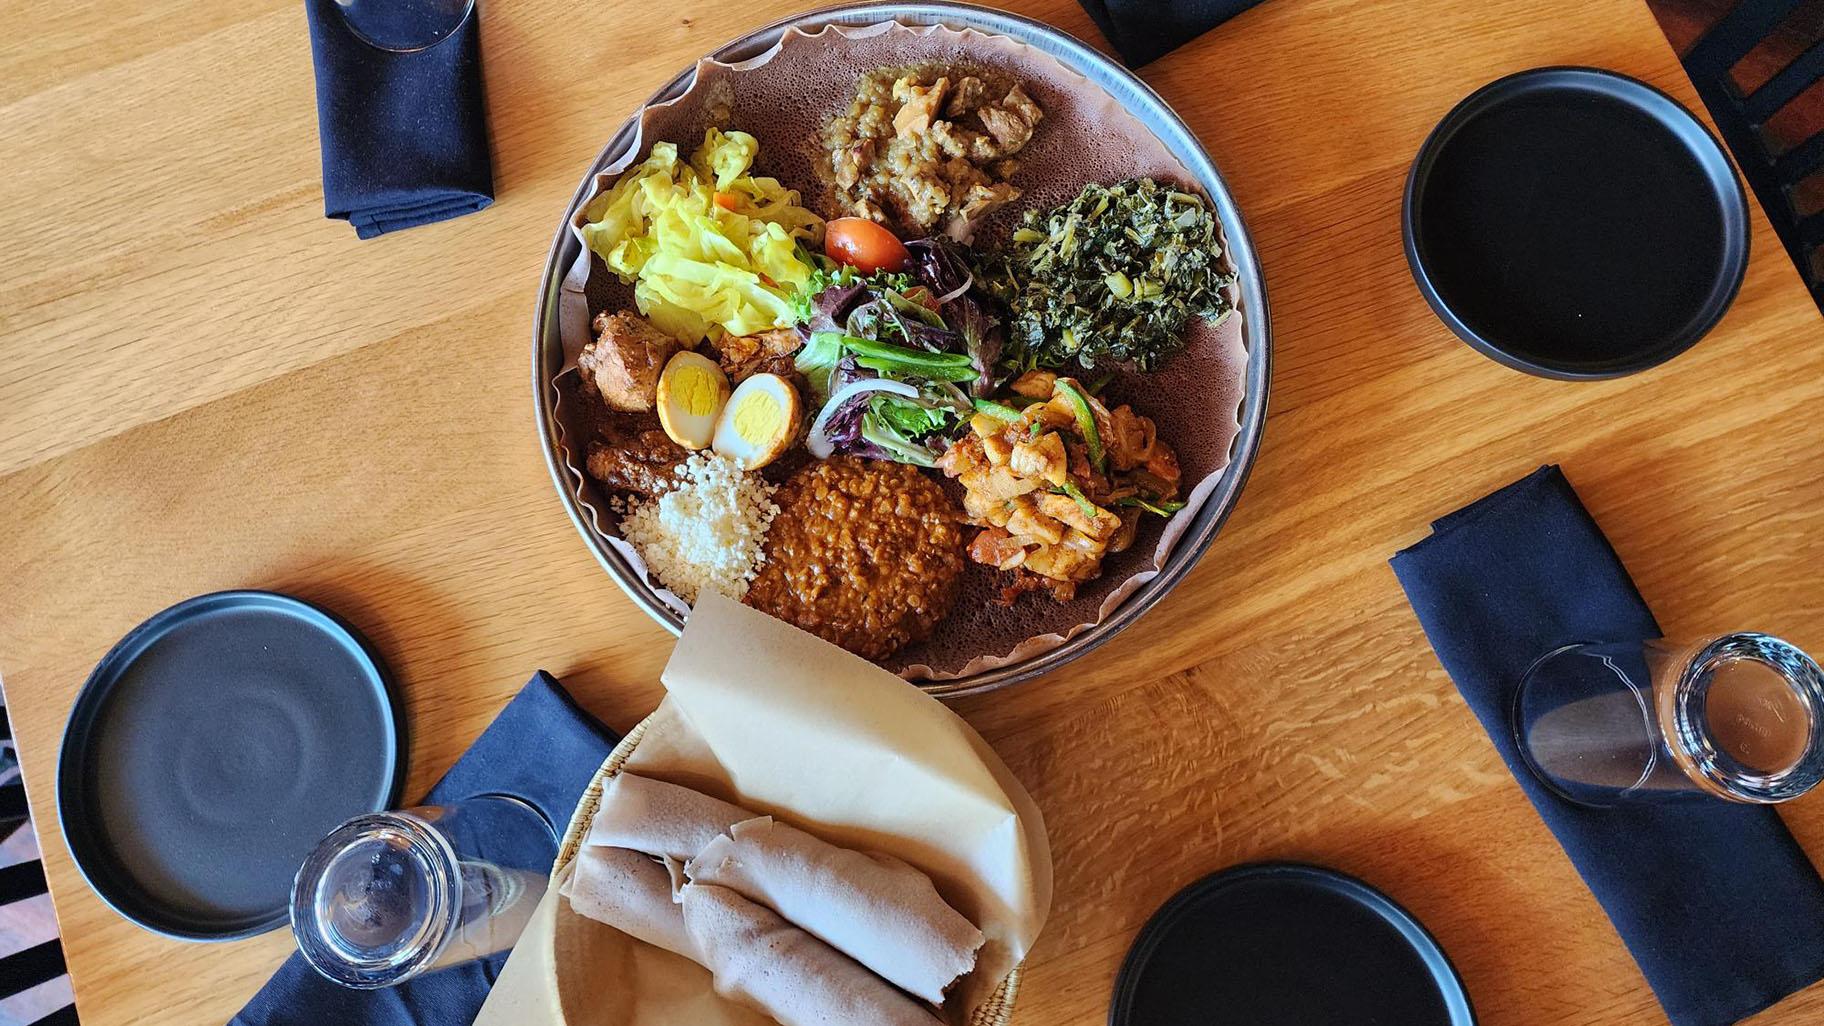 A dish from Demera Restaurant, an Ethiopian eatery in the Uptown neighborhood. (Erica Gunderson / WTTW News)